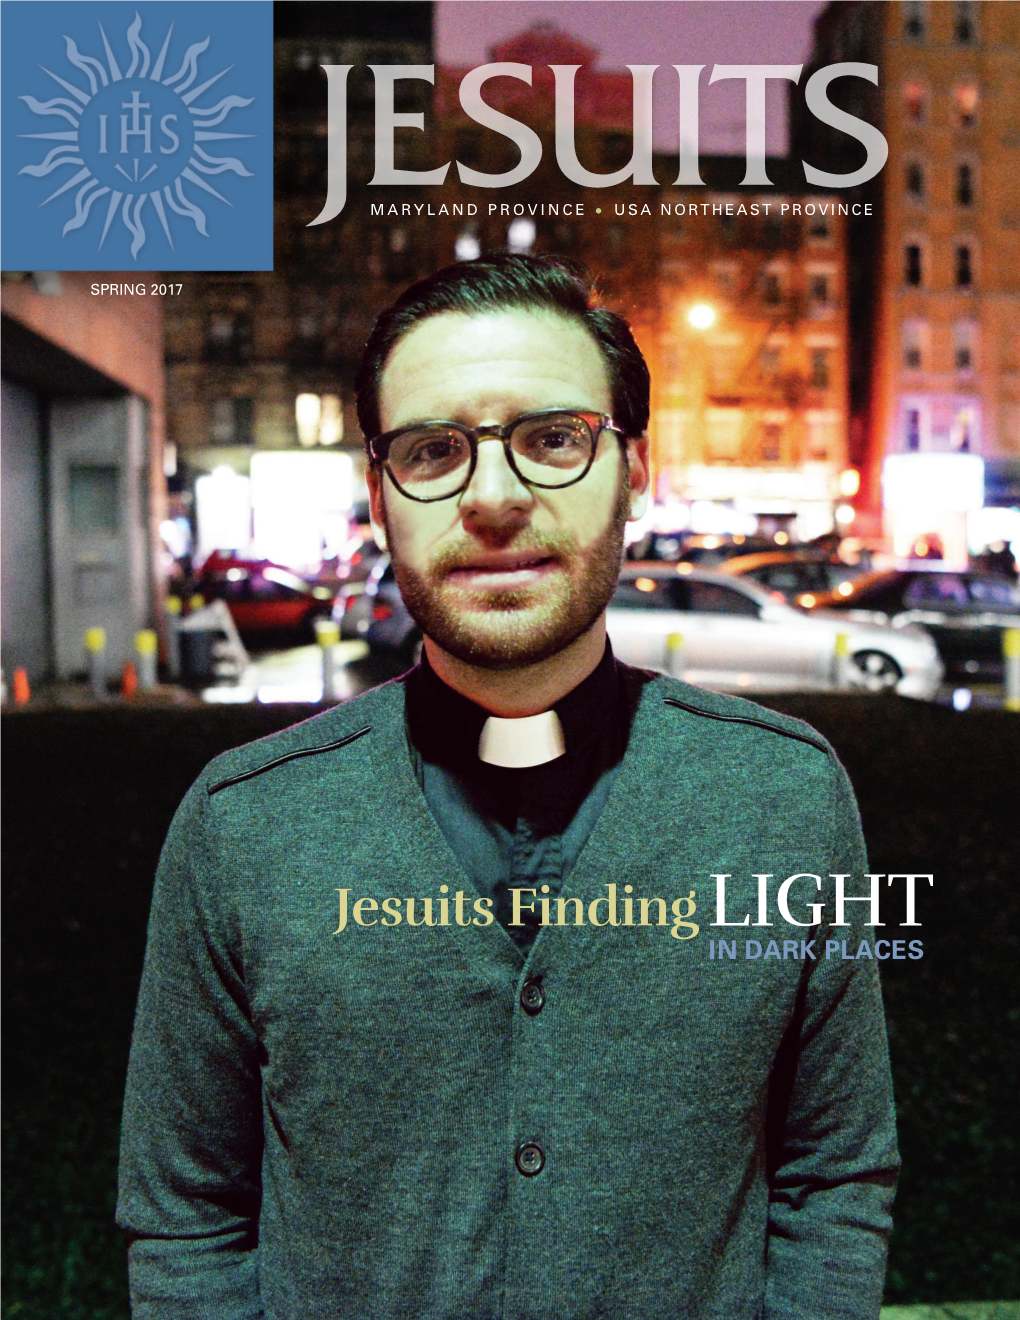 Jesuits Finding LIGHT in DARK PLACES NOR SA TH U E a D S